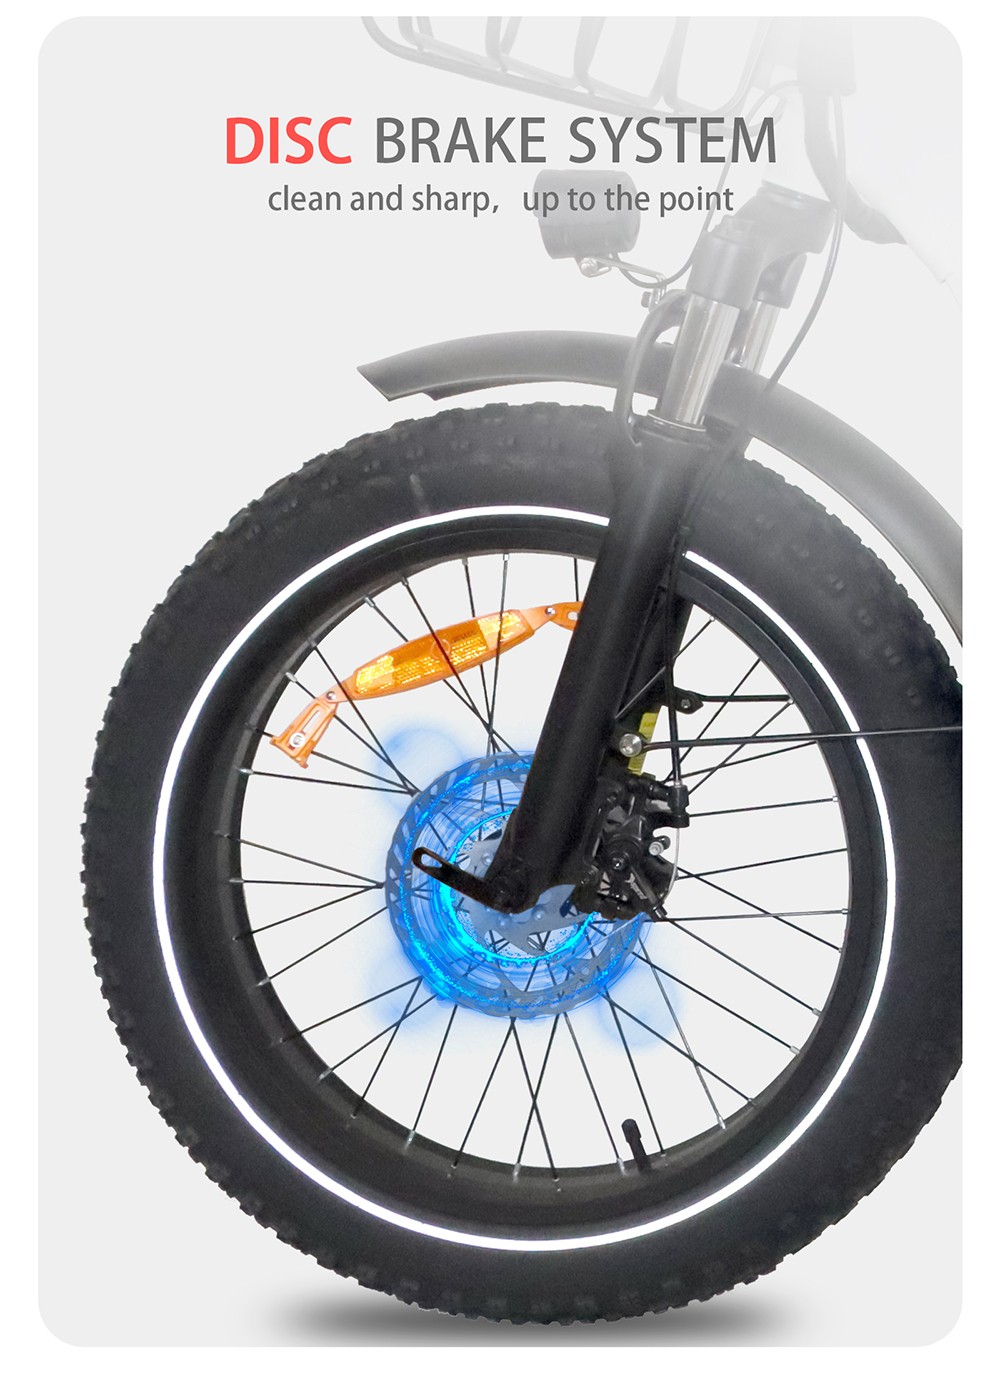 BAOLUJIE DZ2030 Bicicleta eléctrica, neumático de 20 * 4.0 pulgadas Motor de 500 W 48 V 13 Ah Batería extraíble 40 km / h Velocidad máxima 35-45 km Alcance SHIMANO 7 velocidades - Gris